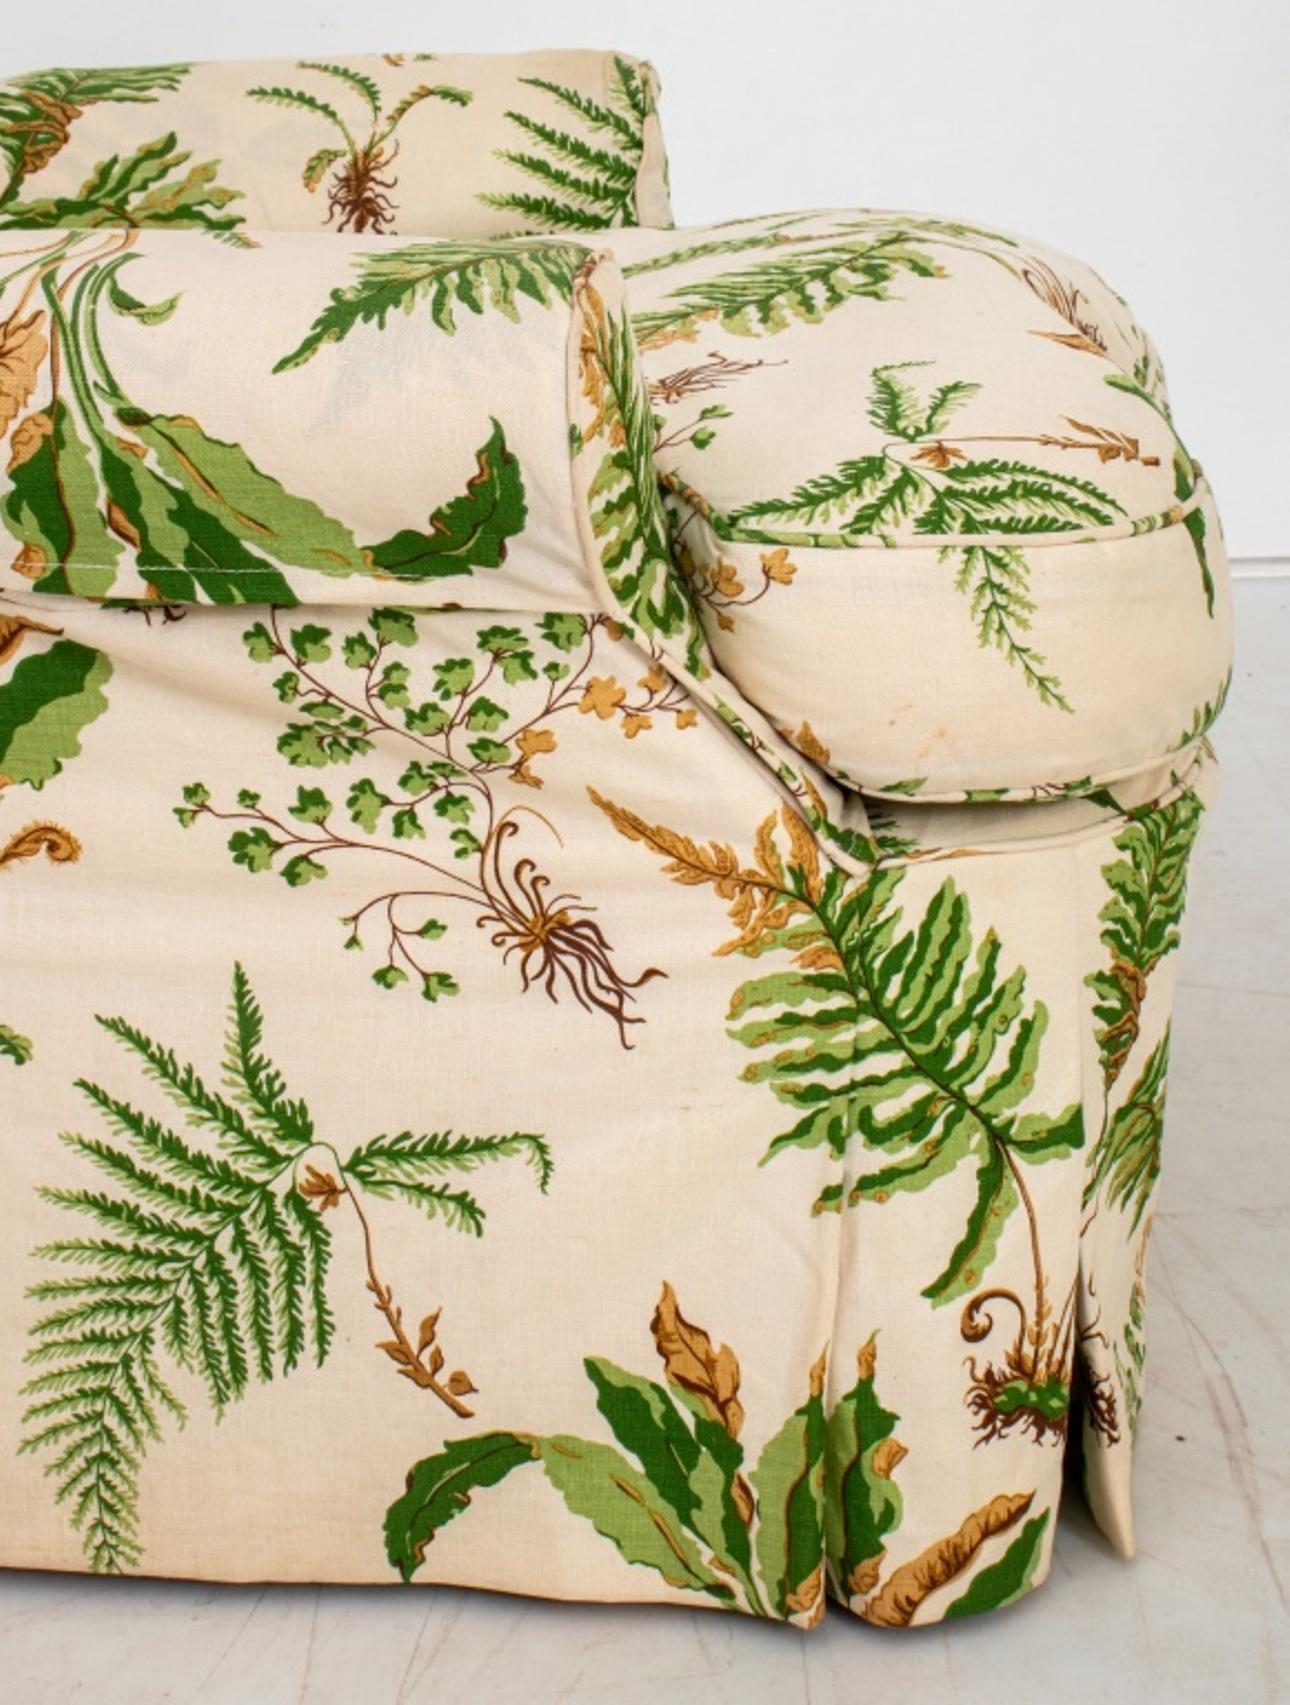 Fabric Club Chairs, Elsie de Wolfe Botanical Slipcovers